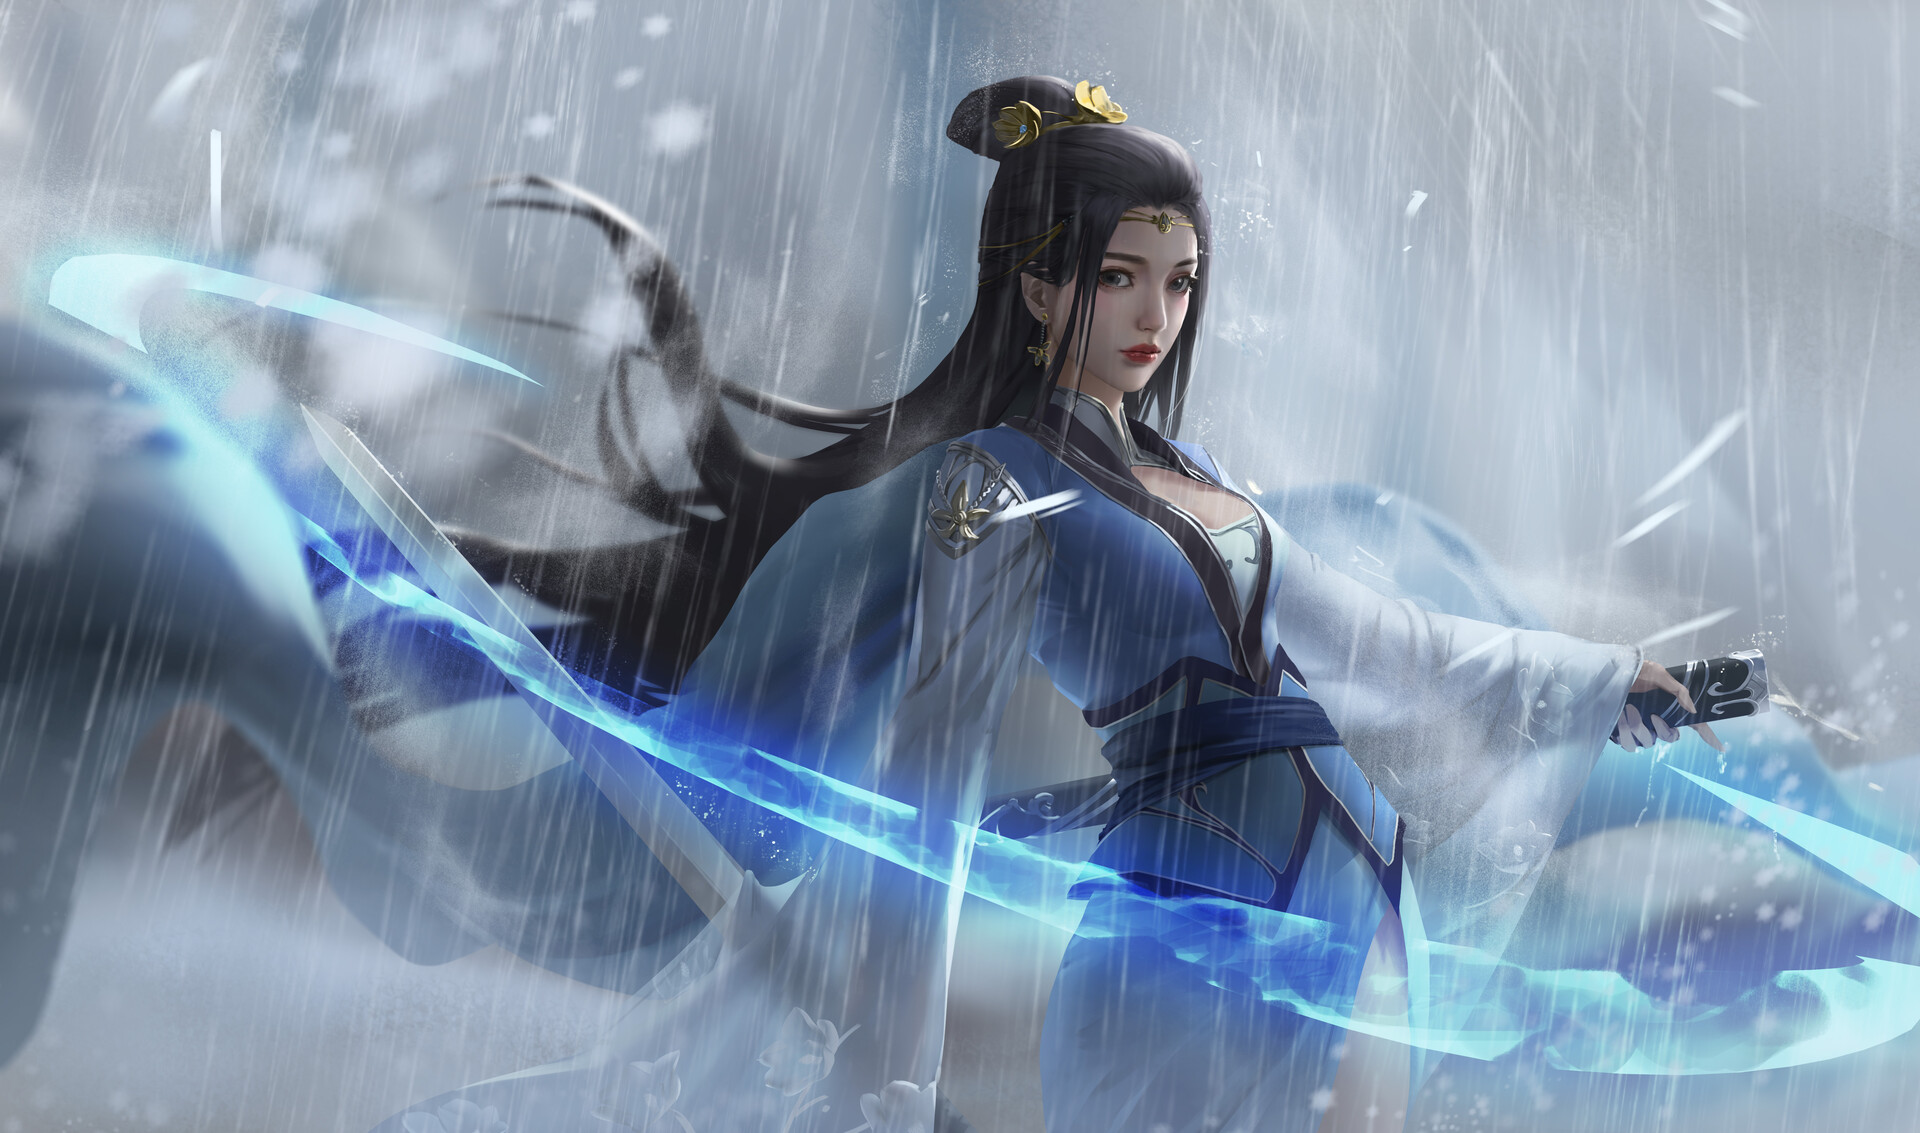 Allen Hsieh Drawing Women Dark Hair Asian Hair Accessories Weapon Sword Blue Clothing Dress Chinese  1920x1133